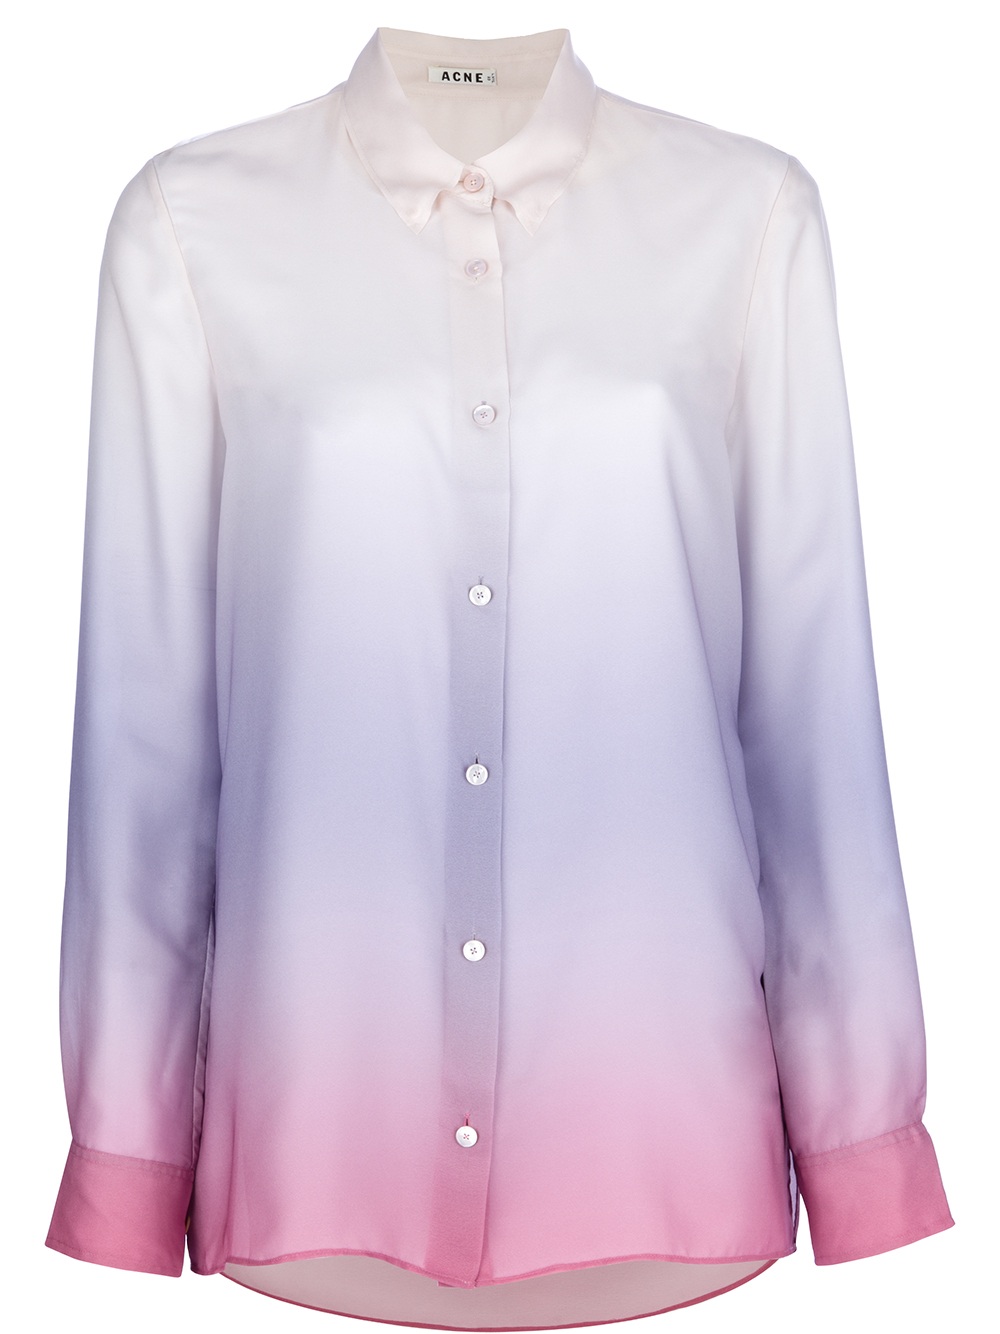 Acne Studios Pat Degradé Shirt in Purple (white) | Lyst